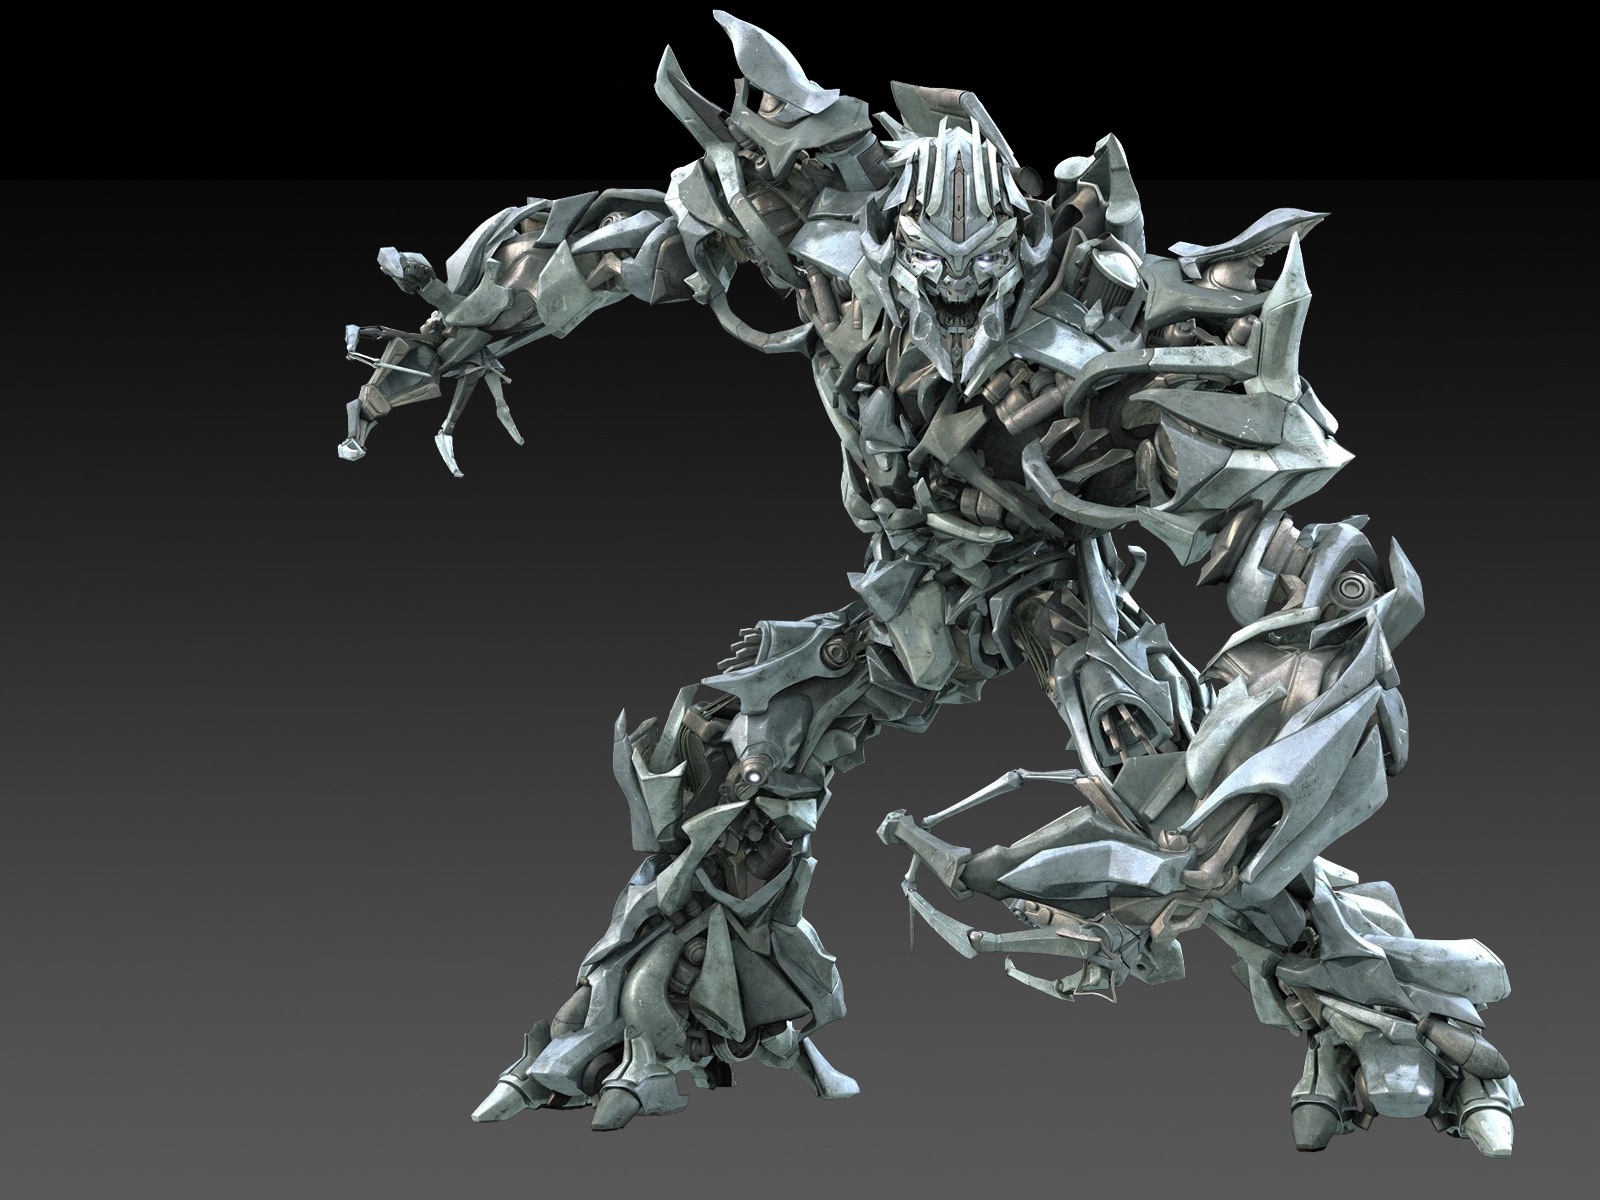 Transformers Wallpaper - Megatron - Savitar Model The Flash - HD Wallpaper 